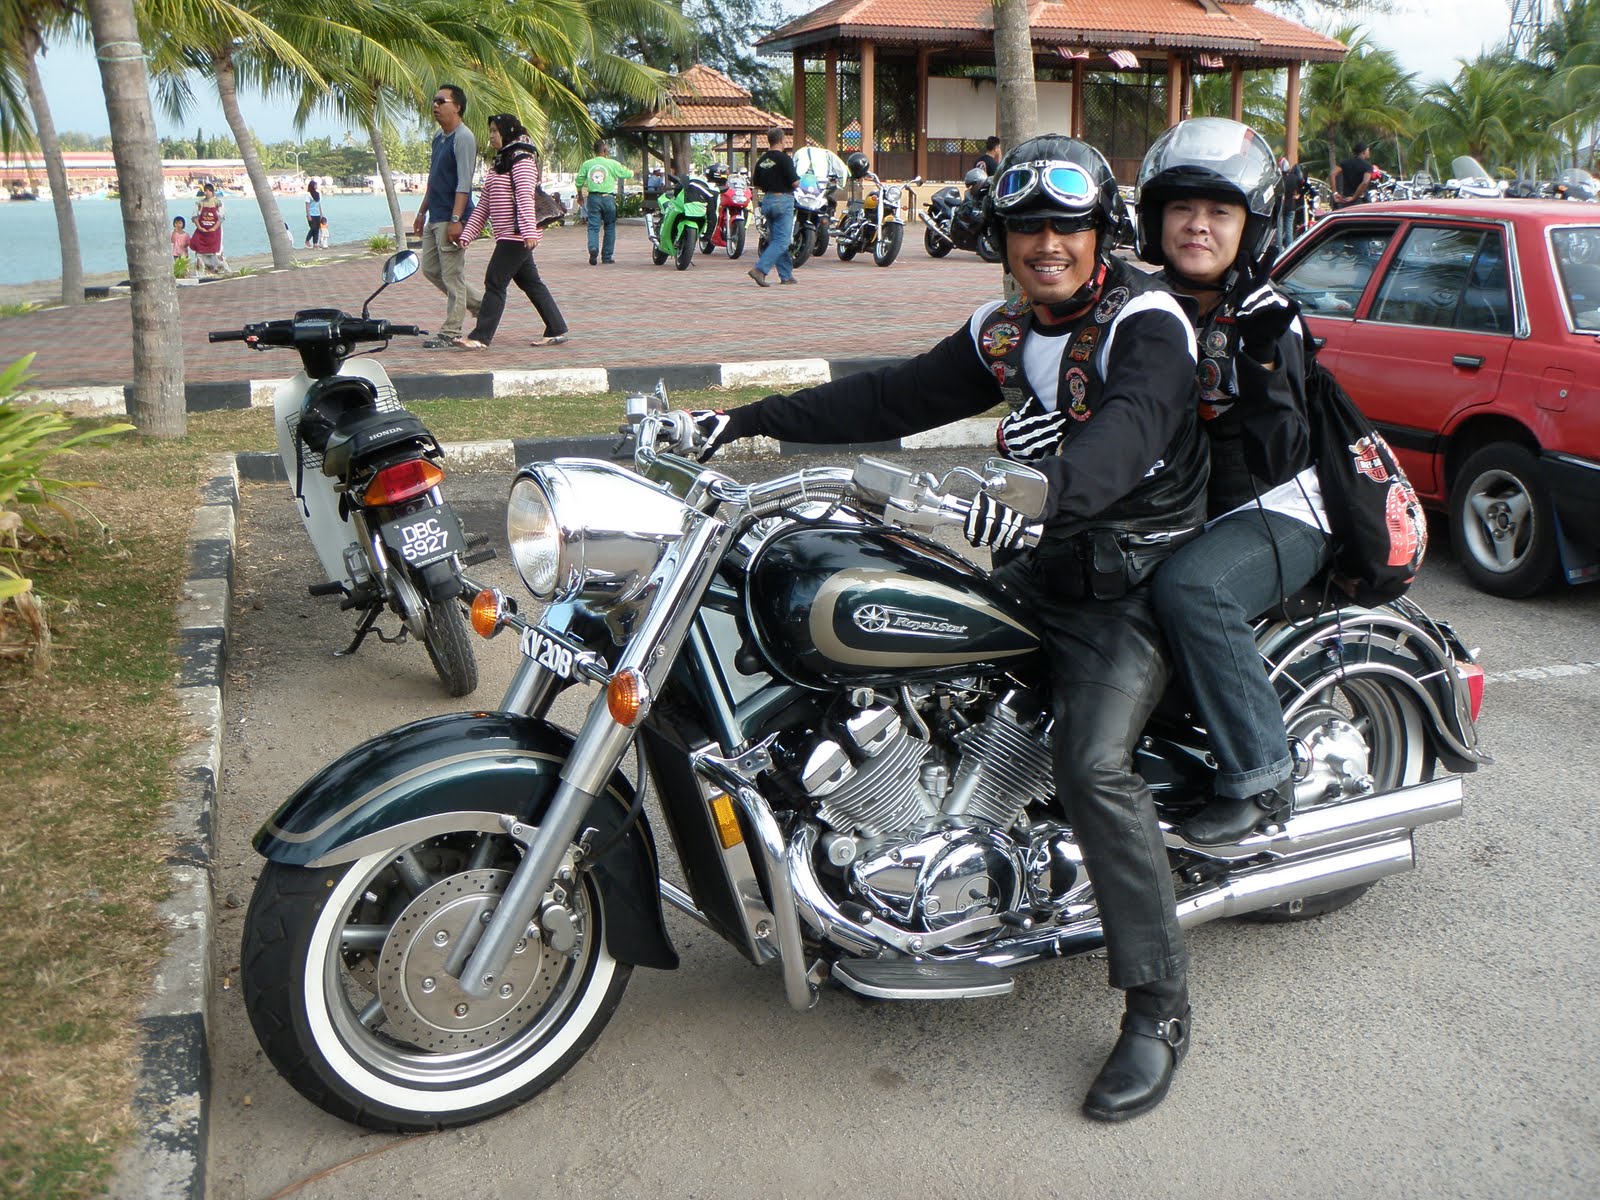 Nik Harley Davidson Malaysia